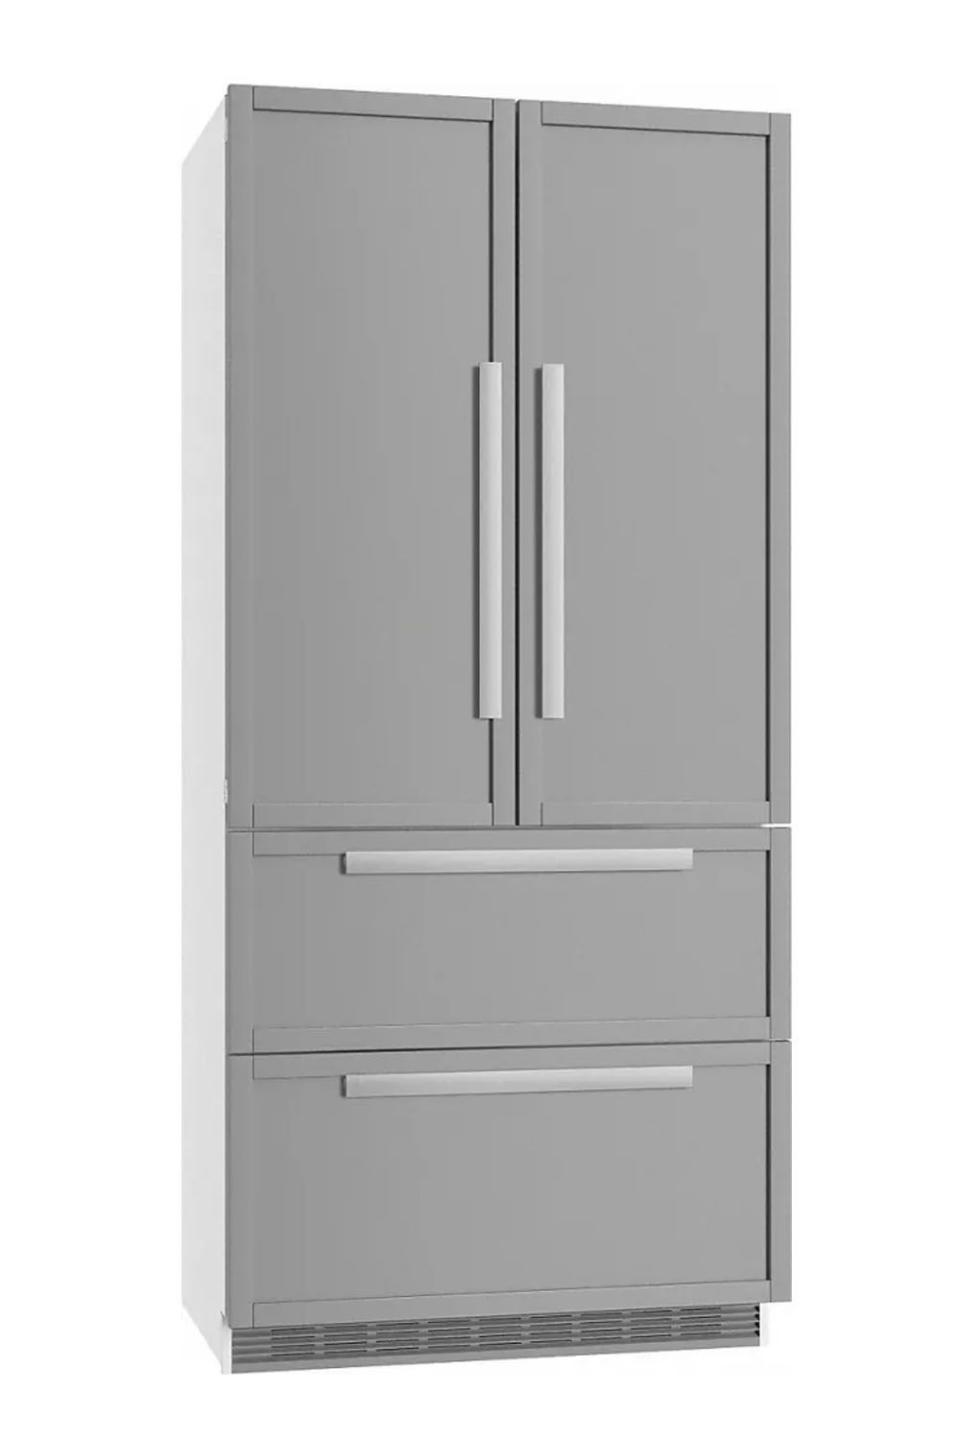 6) Miele PerfectCool Series Refrigerator